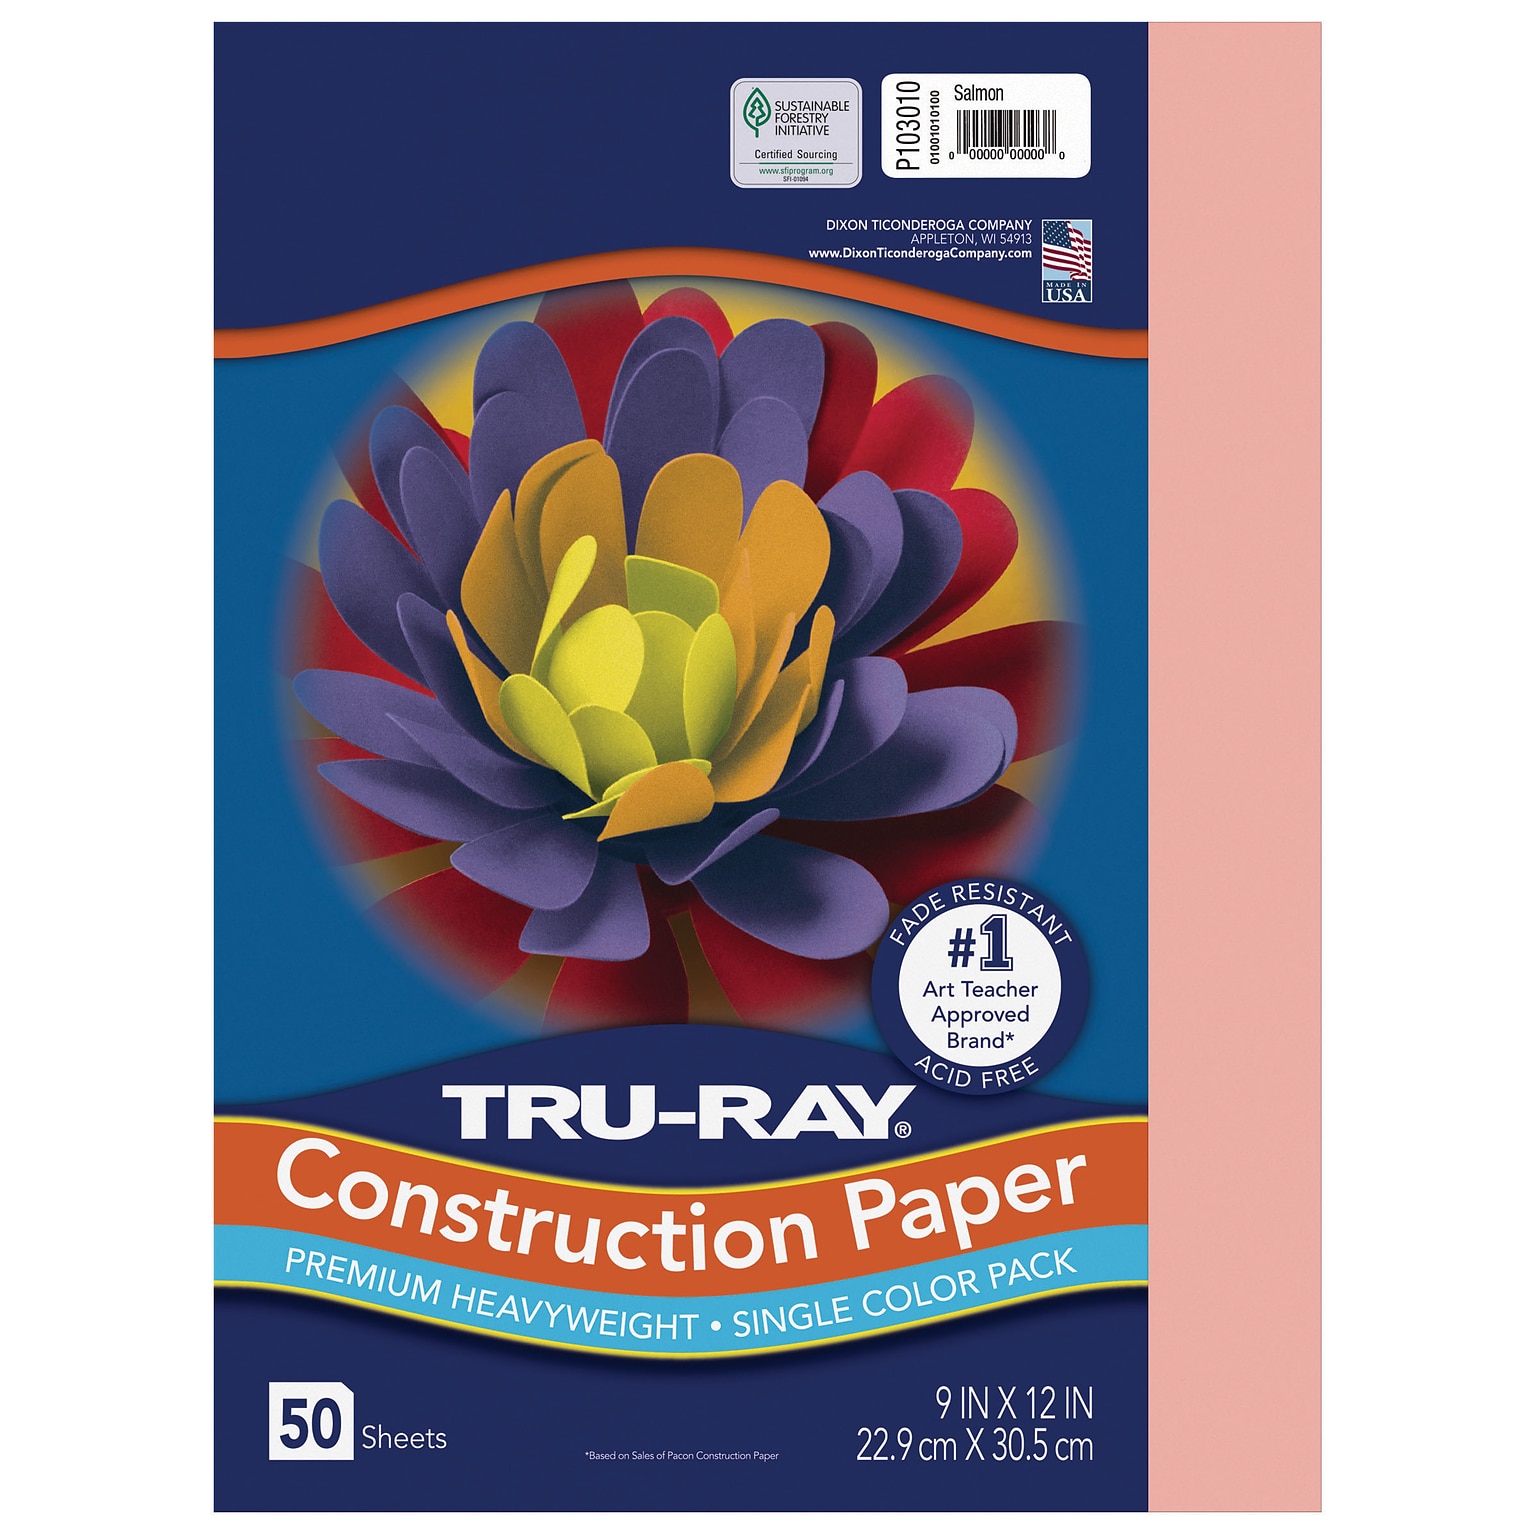 Tru-Ray 9 x 12 Construction Paper, Salmon, 50 Sheets (P103010)